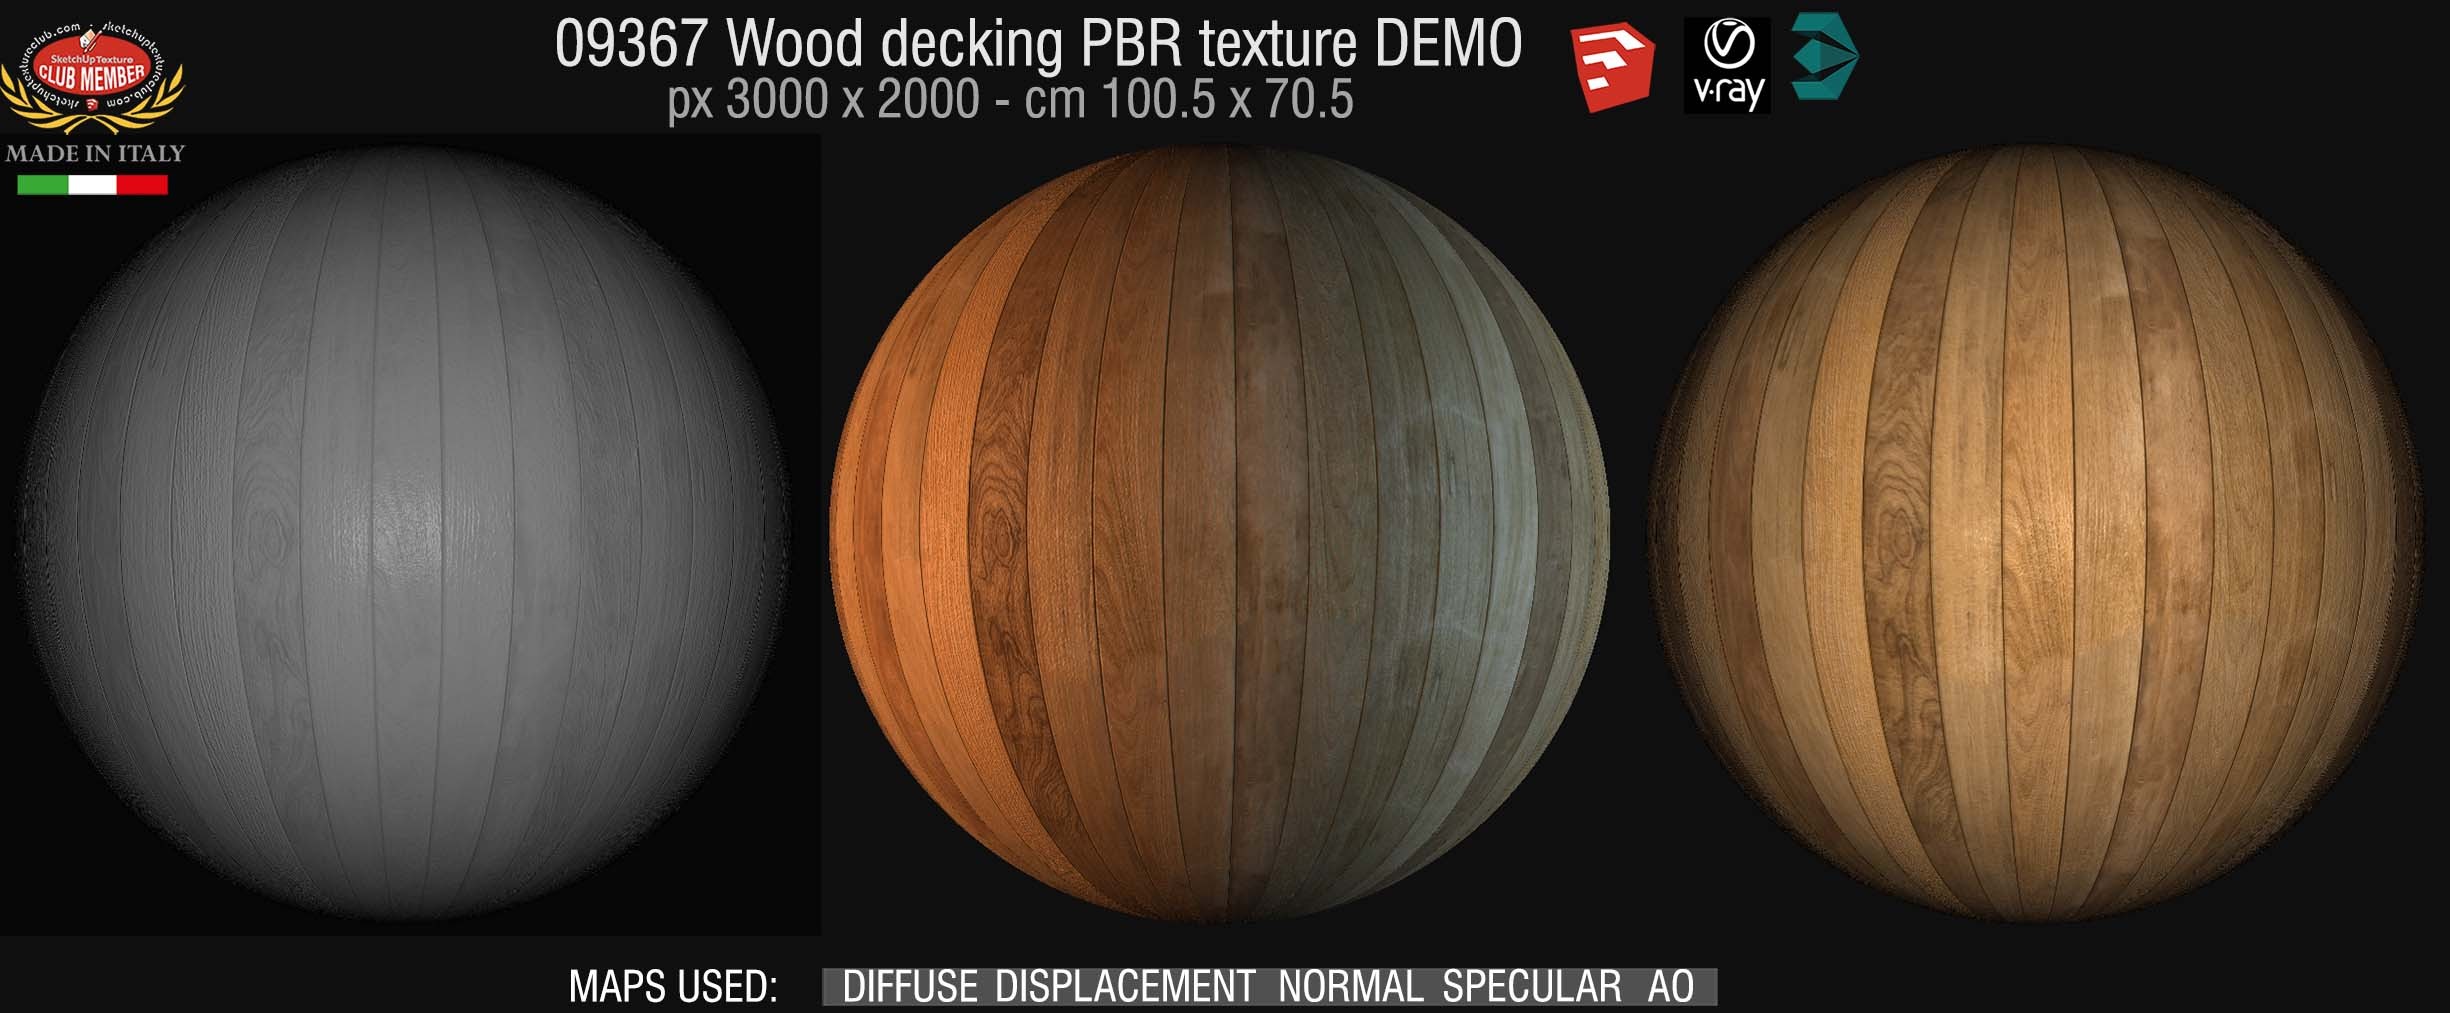 09367 Wood decking PBR texture seamless DEMO